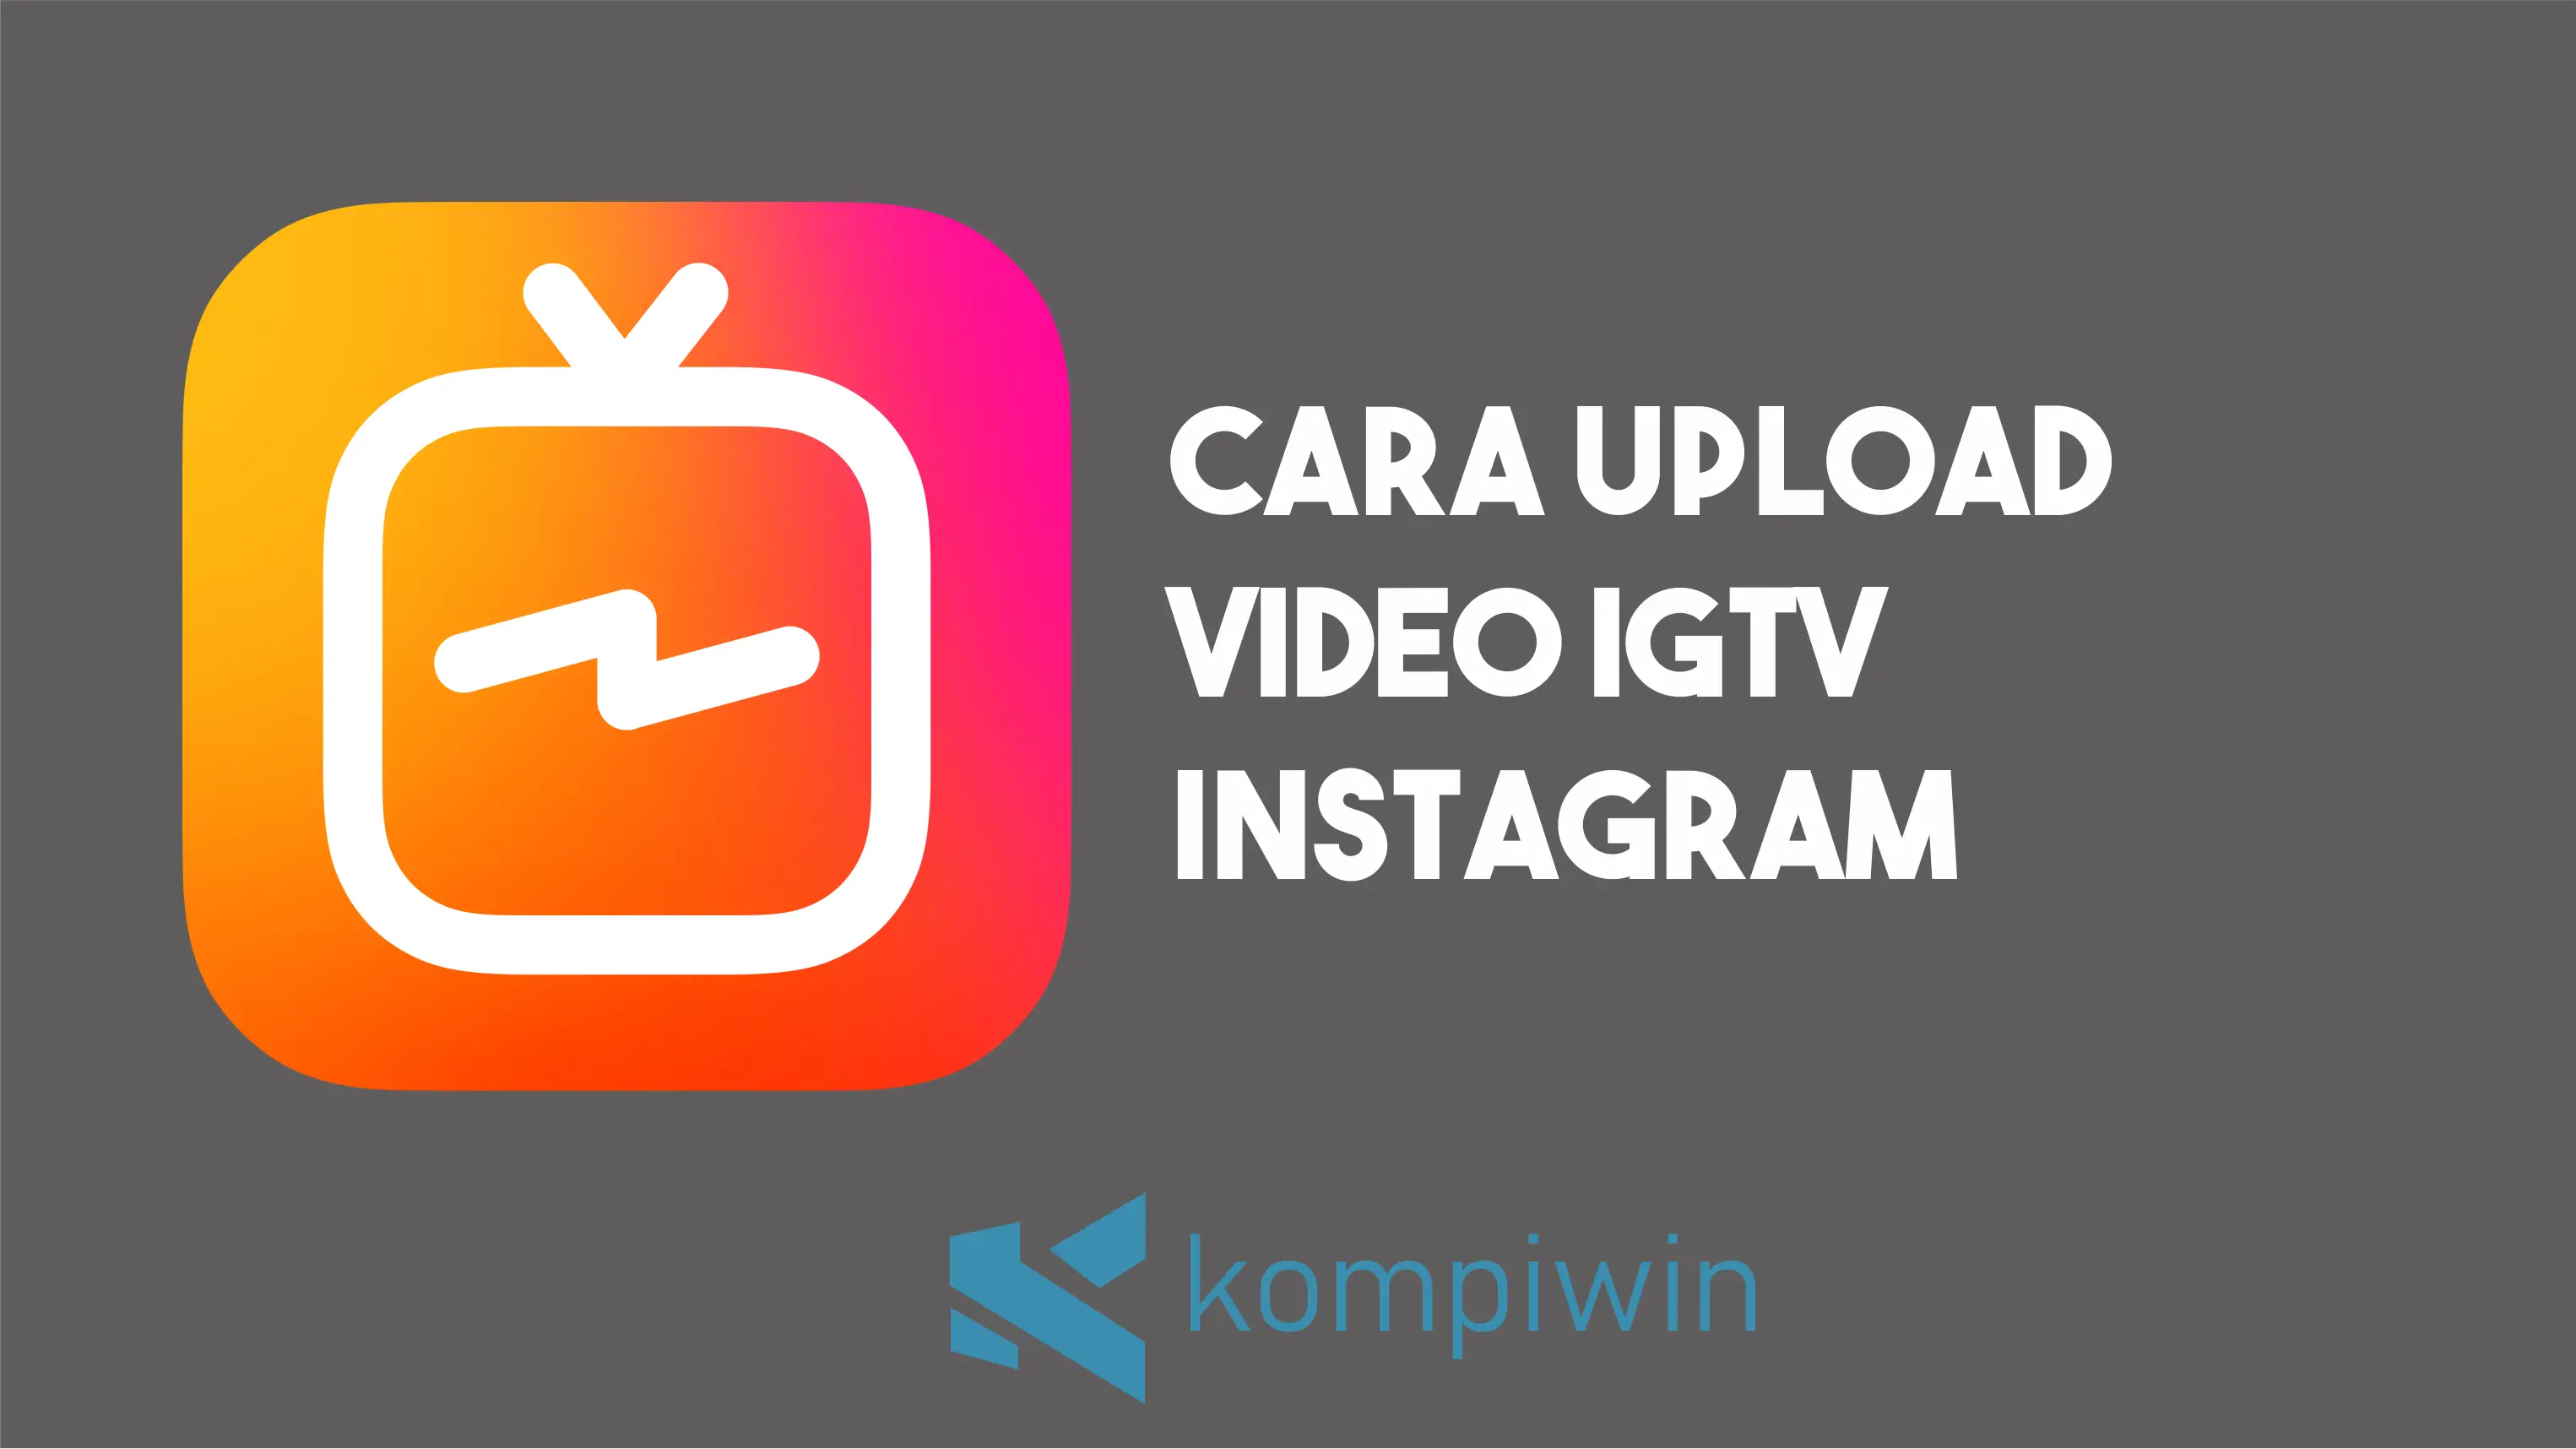 Cara Upload Video IGTV 1